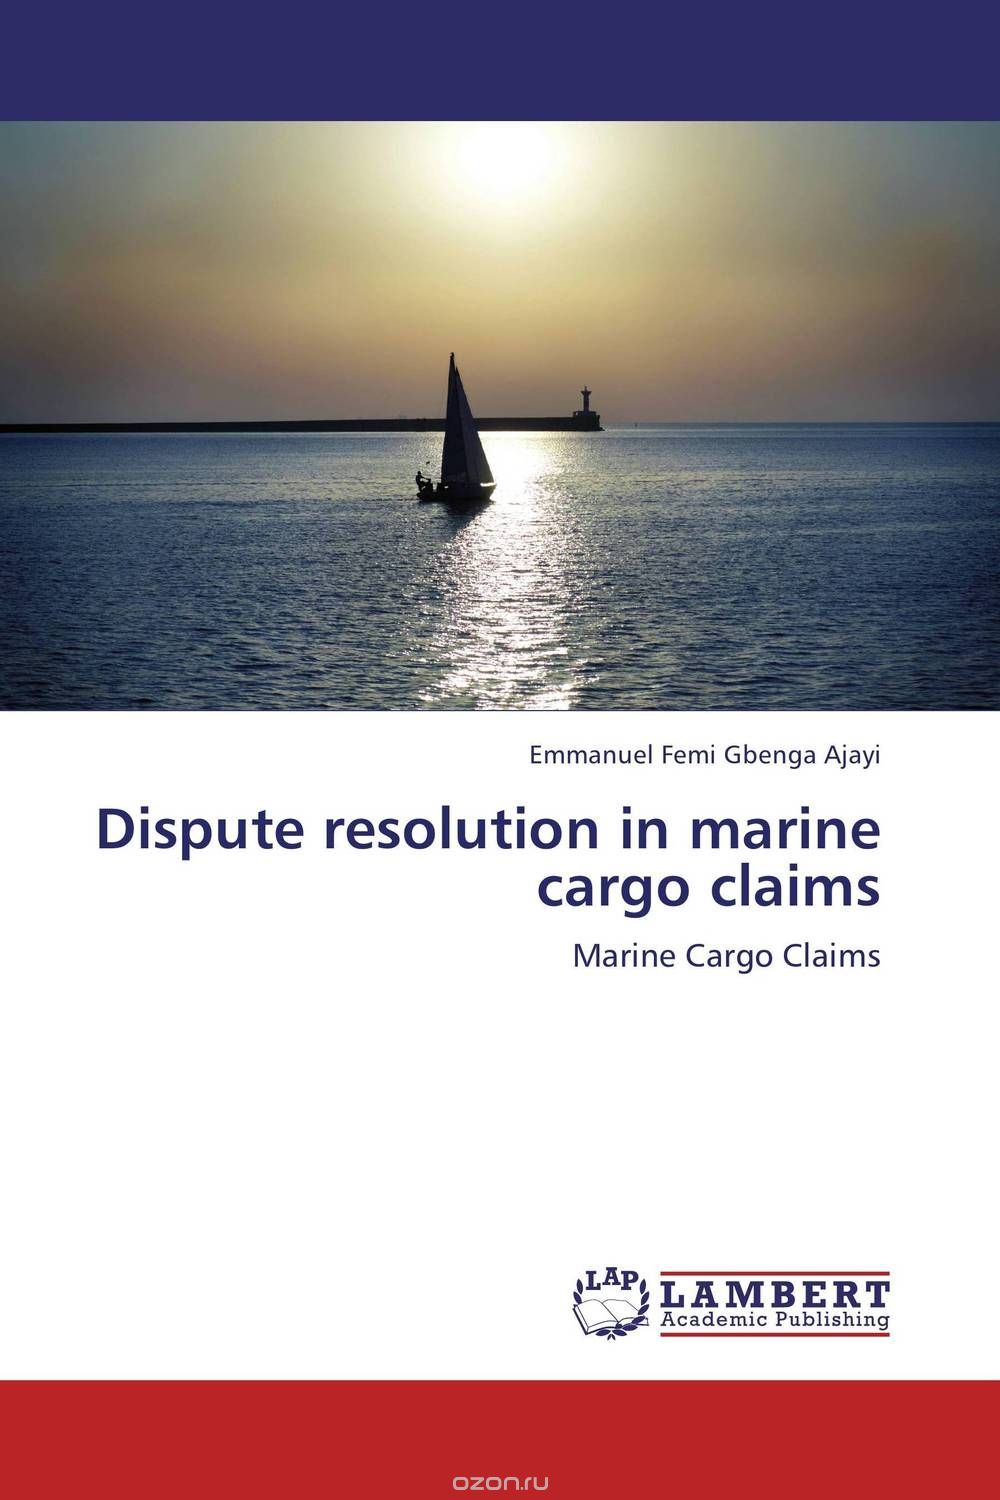 Скачать книгу "Dispute resolution in marine cargo claims"